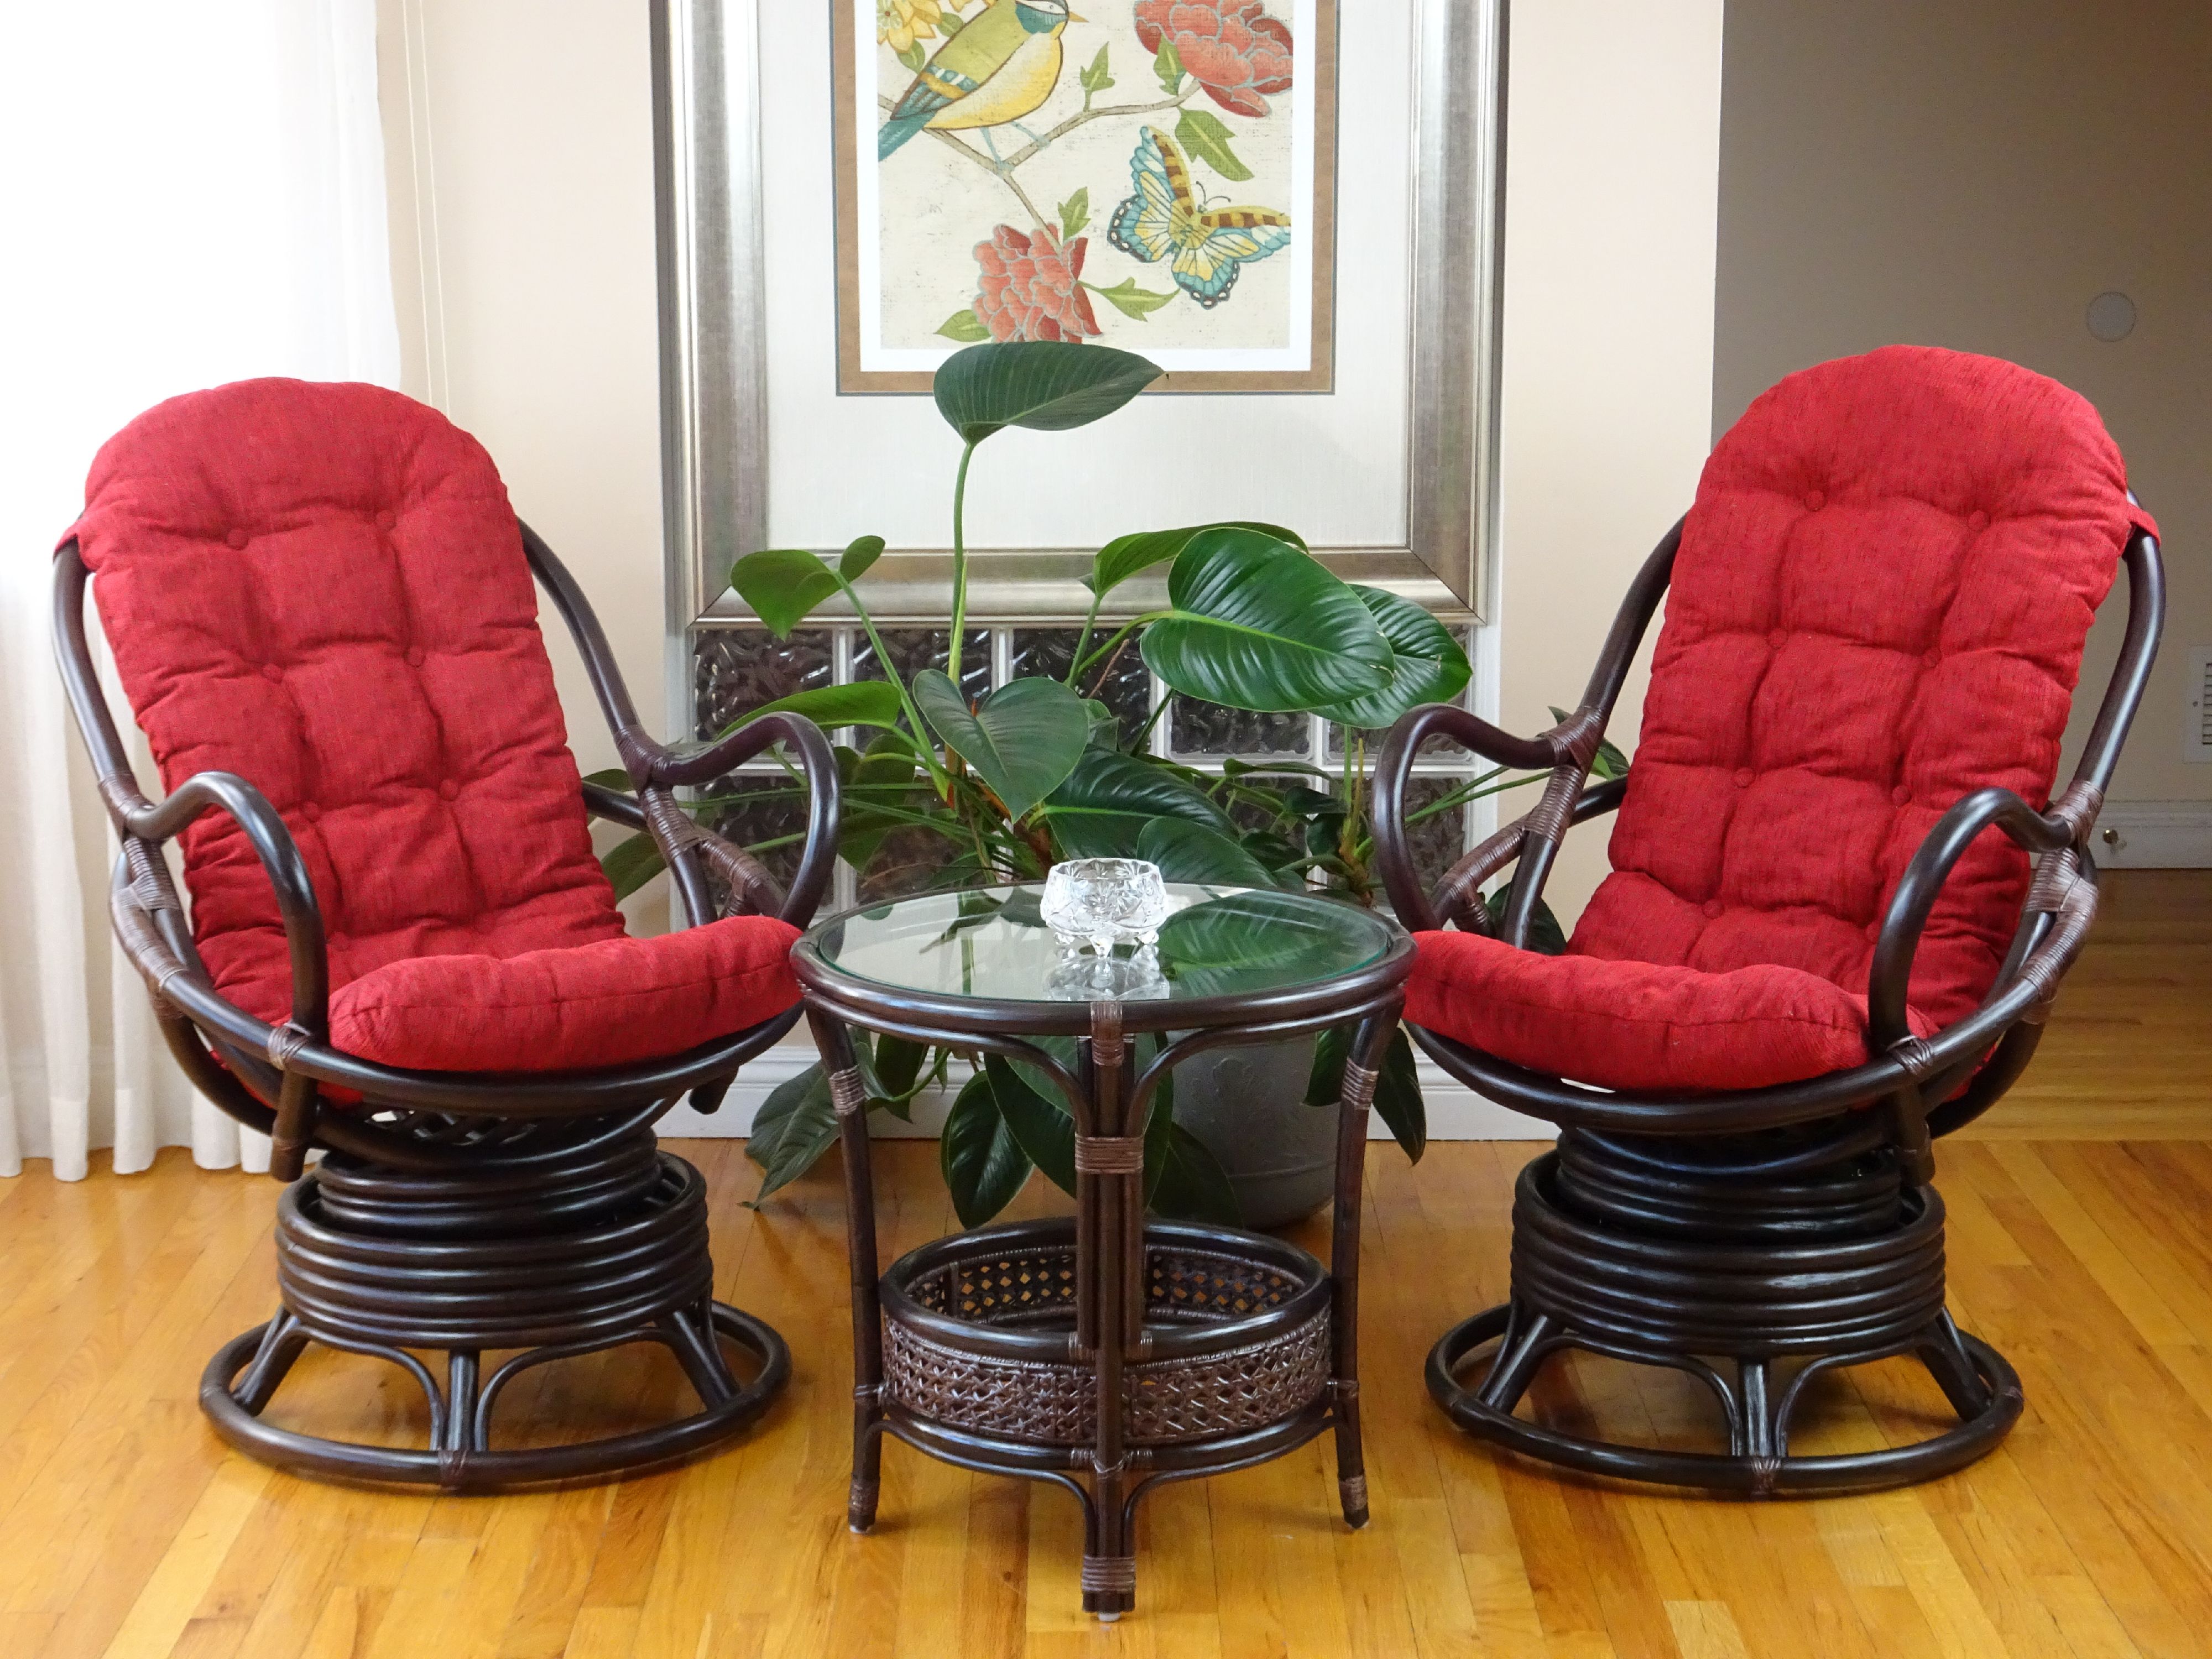 SK New Interiors Java Swivel Rocking Lounge Chair Natural Rattan Wicker w/Burgundy Cushion, Dark Brown - image 3 of 6